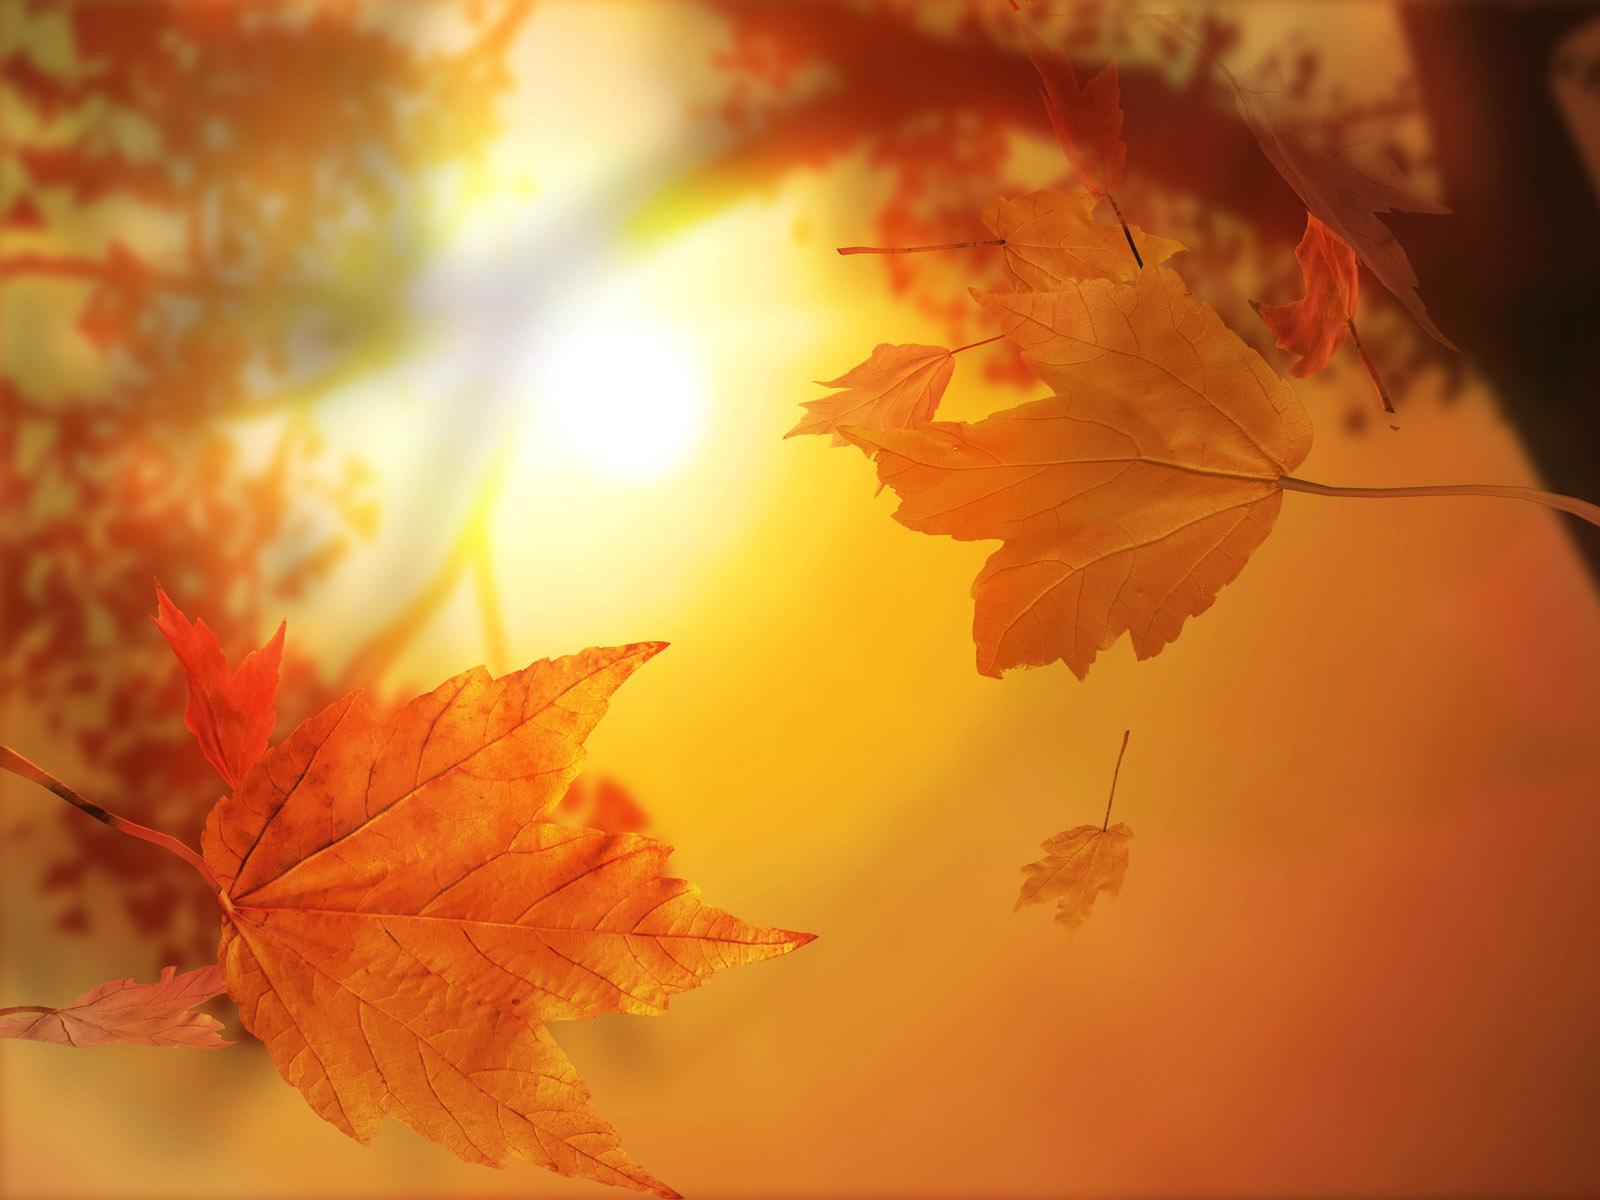 Download wallpaper: autumn sun, download photo, leaves